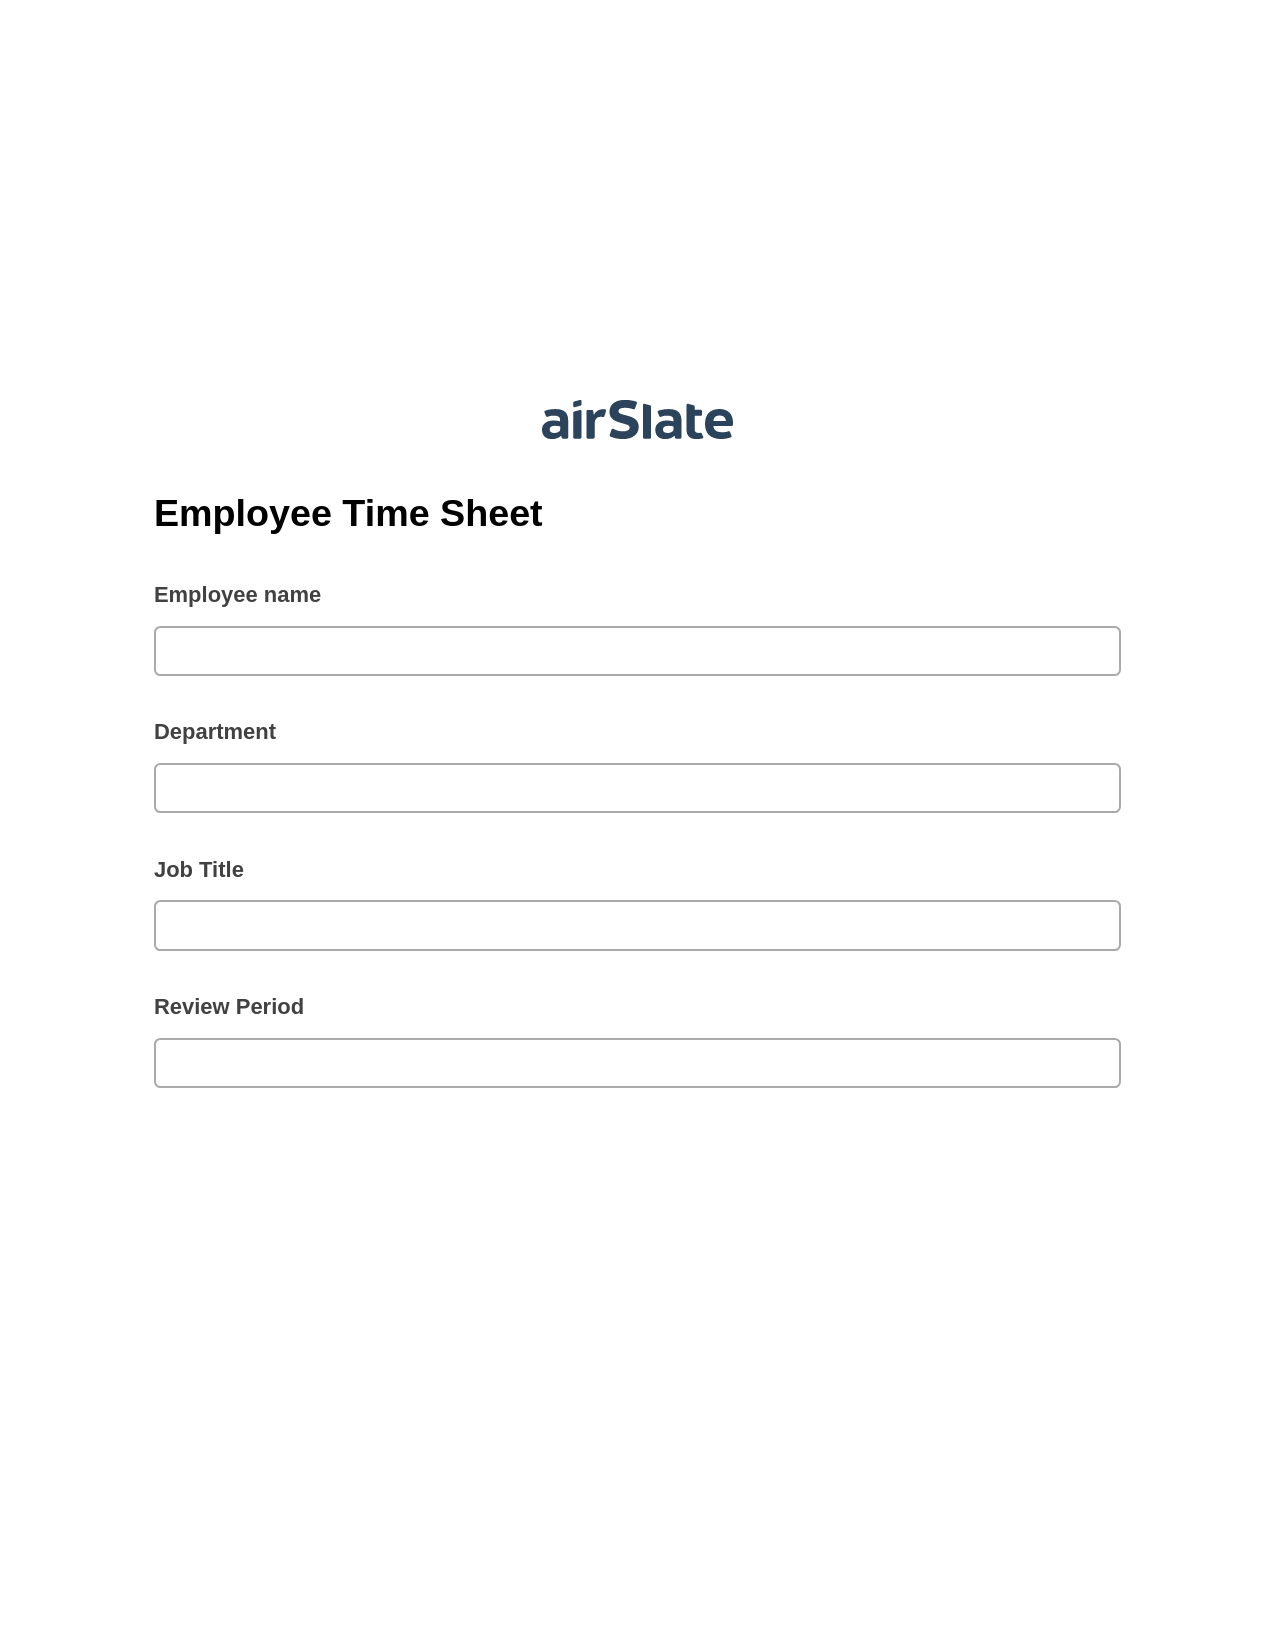 Multirole Employee Time Sheet Pre-fill from MySQL Bot, Update Audit Trail Bot, Archive to SharePoint Folder Bot